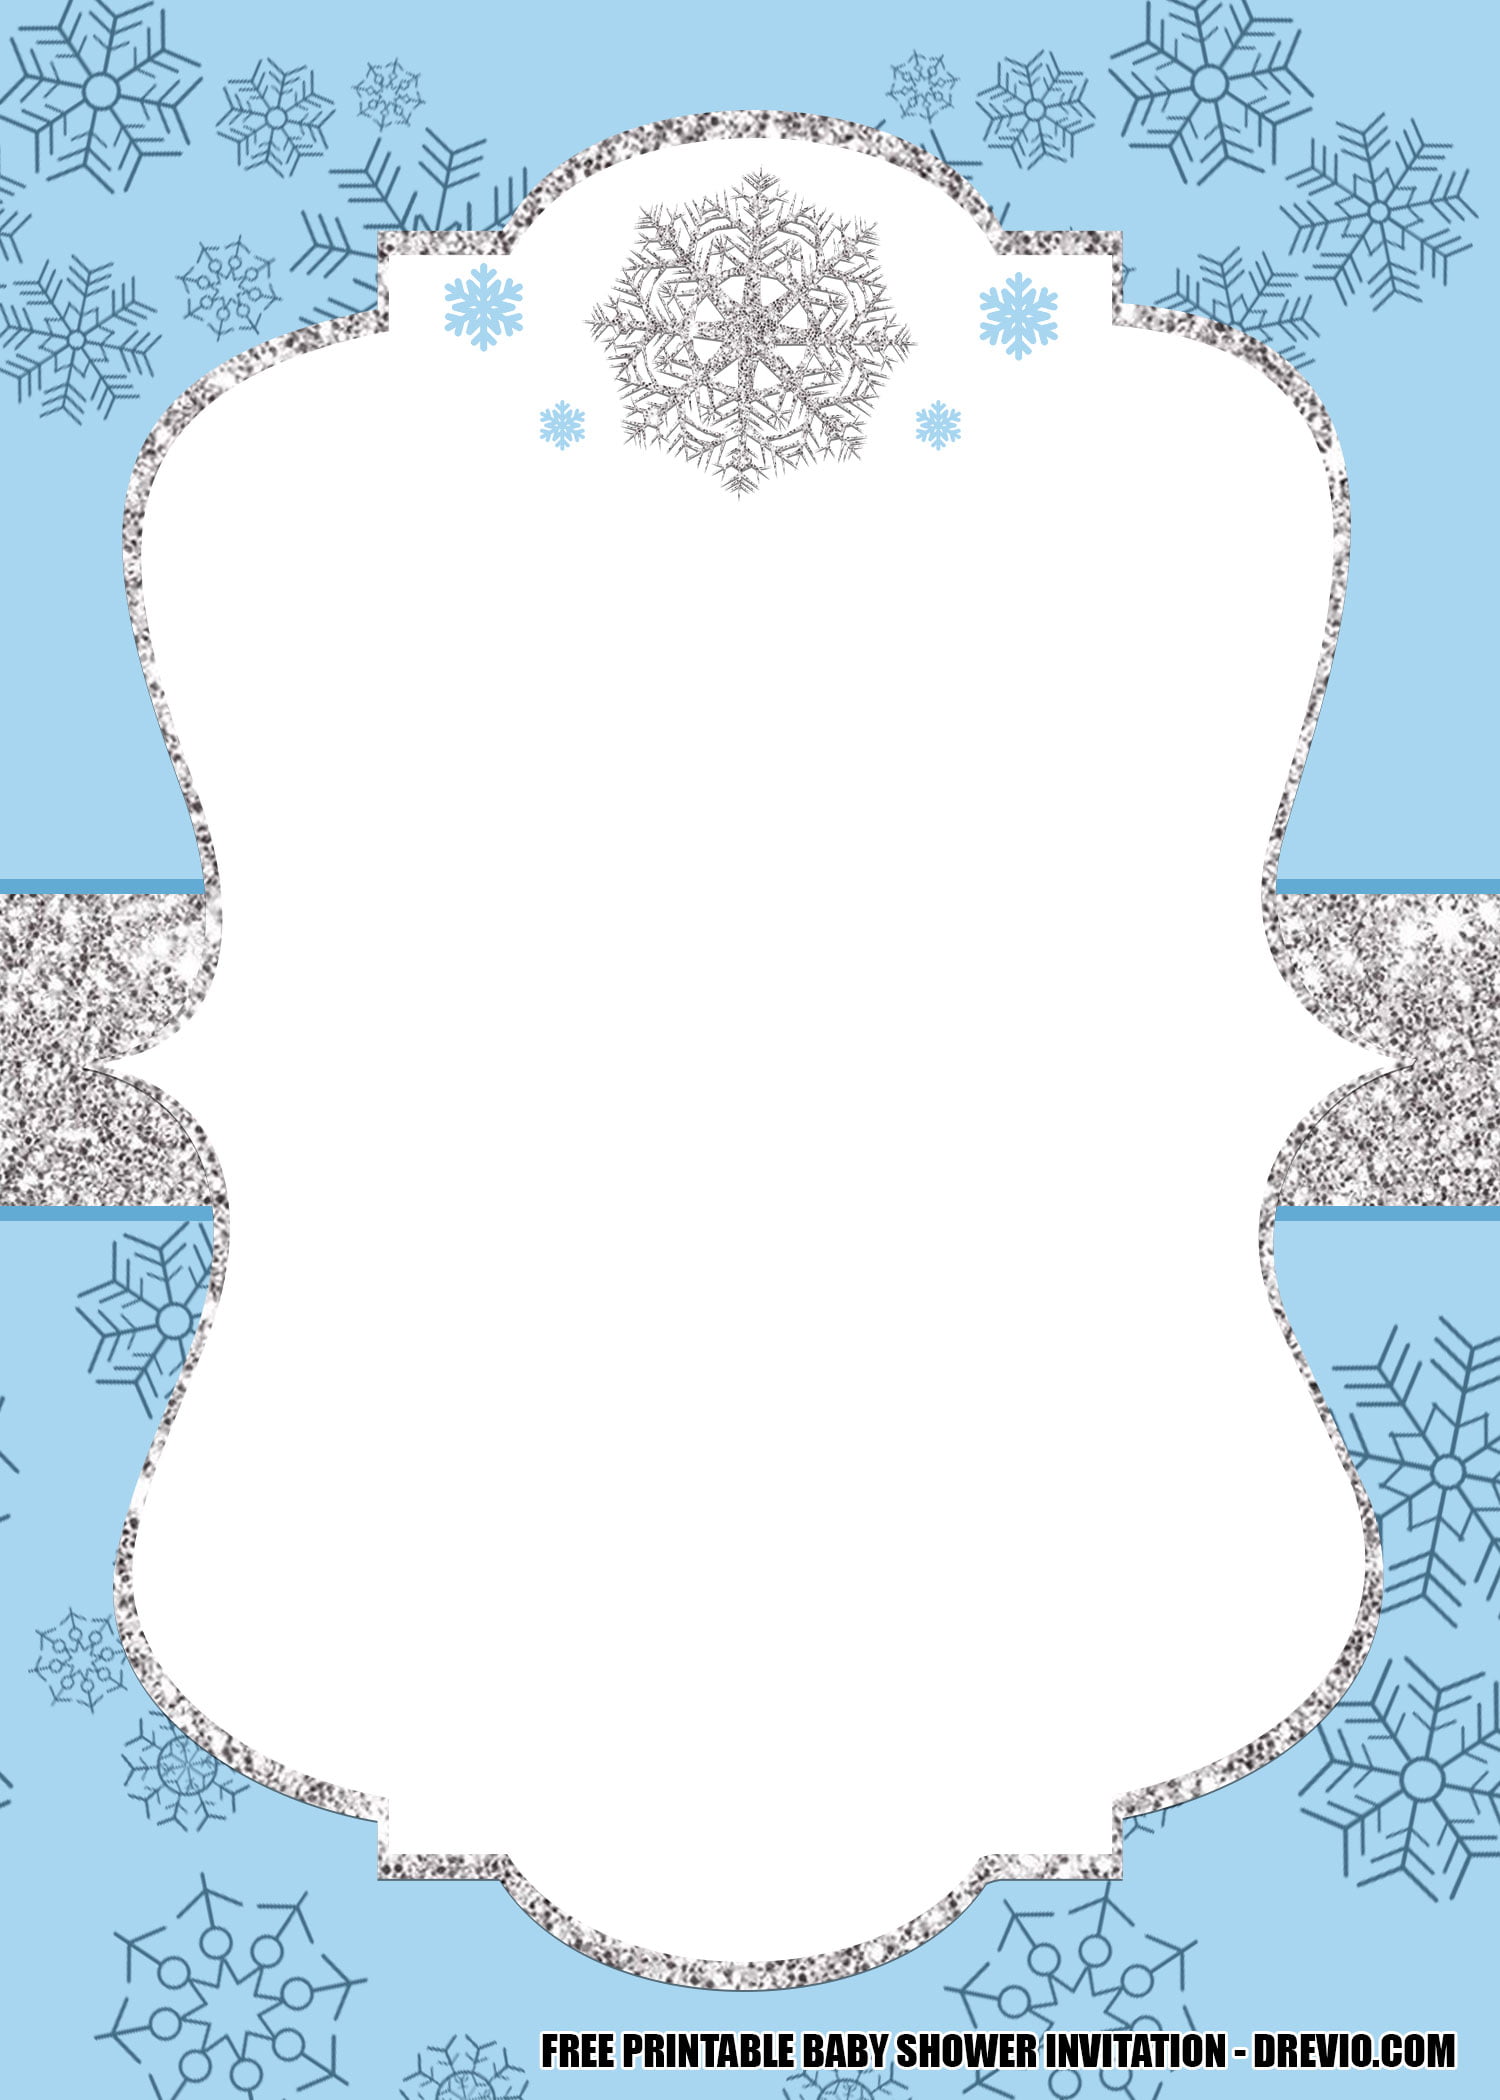 FREE Winter Wonderland Baby Shower Invitation Templates Editable Download Hundreds FREE